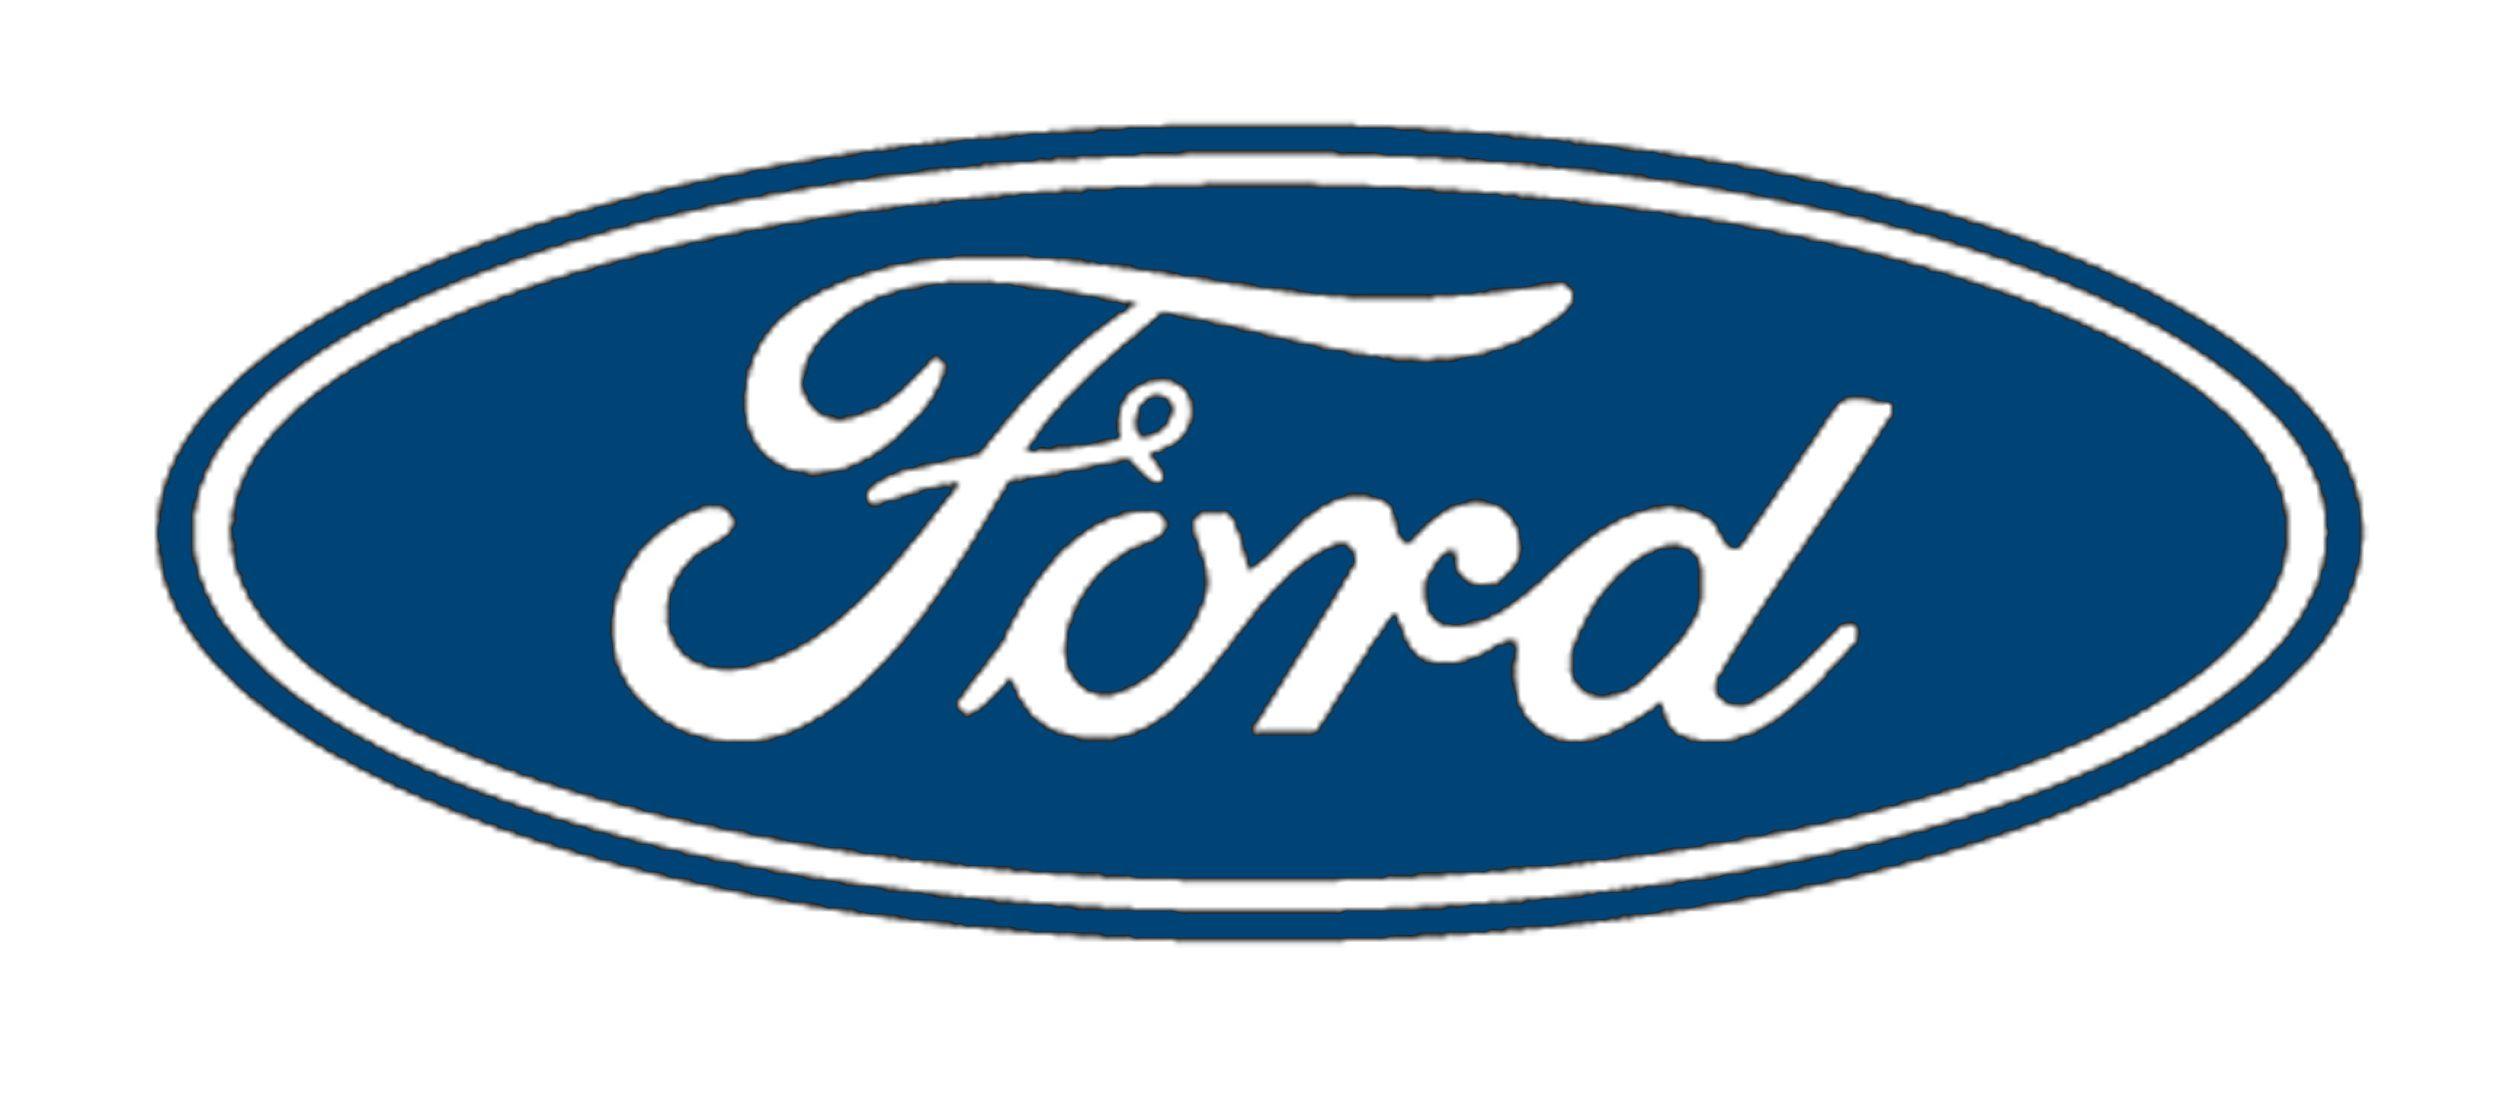 Old Ford Logo - How I remember the Ford logo : MandelaEffect